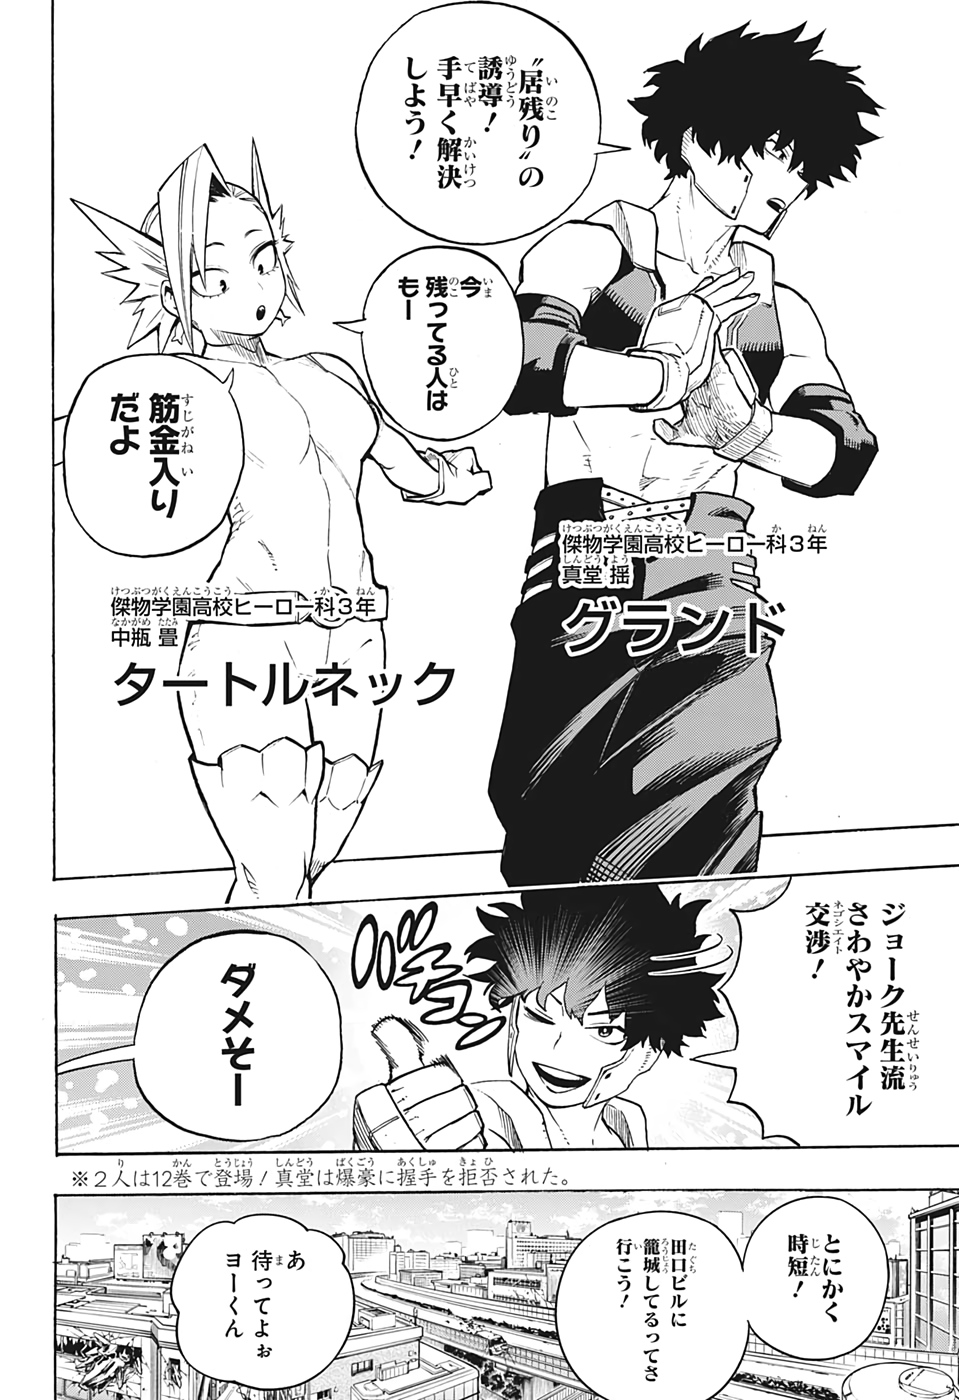 Boku no Hero Academia - Chapter 307 - Page 2